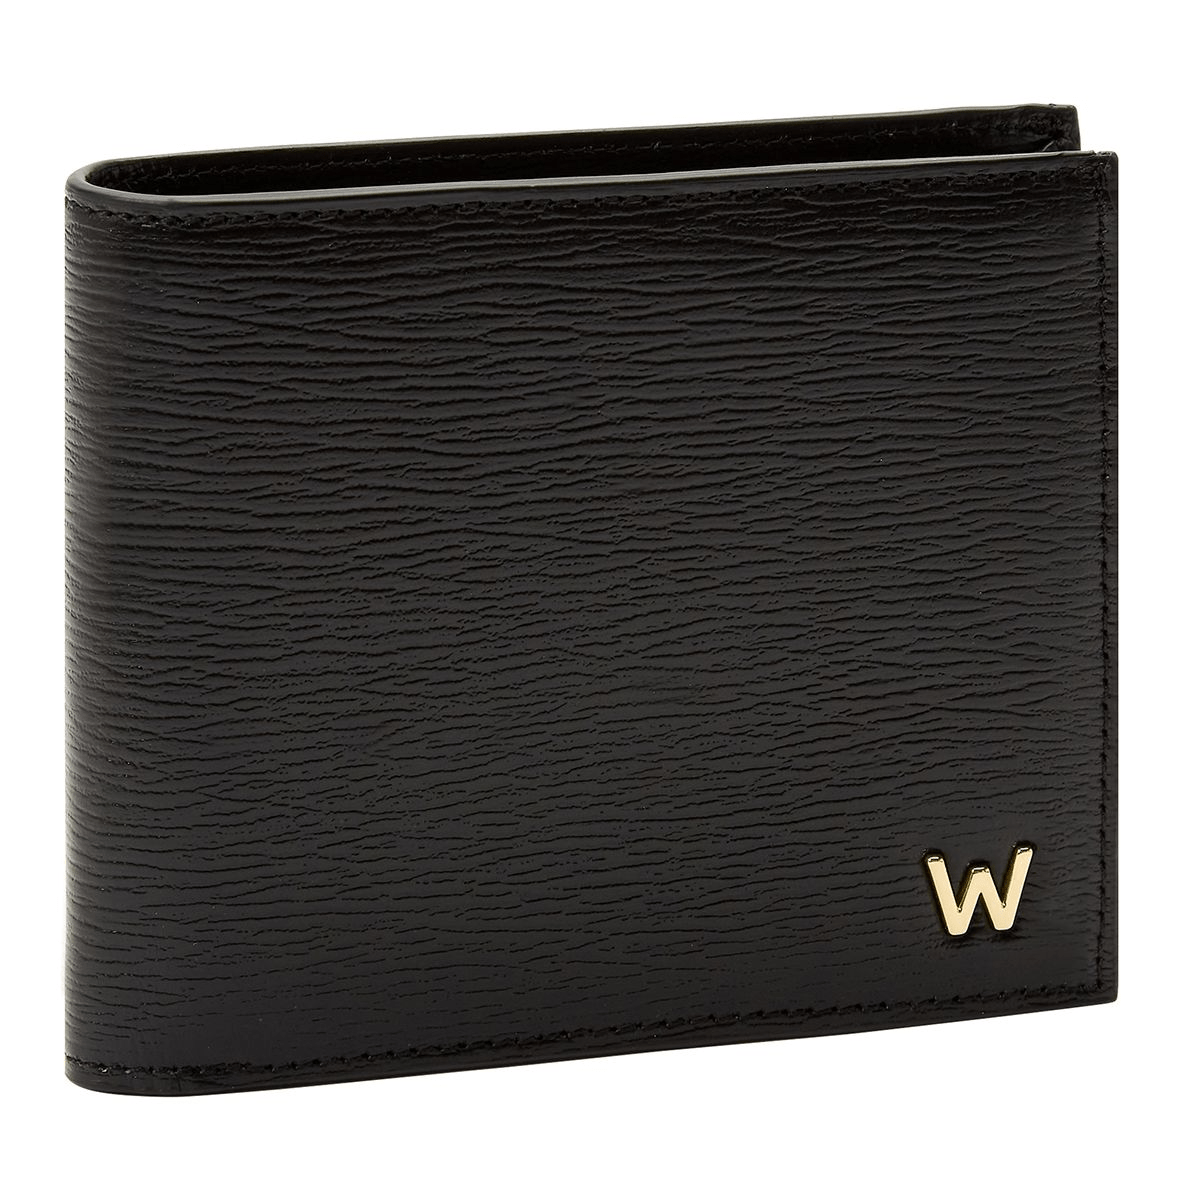 WOLF W Billfold Black Leather 774002